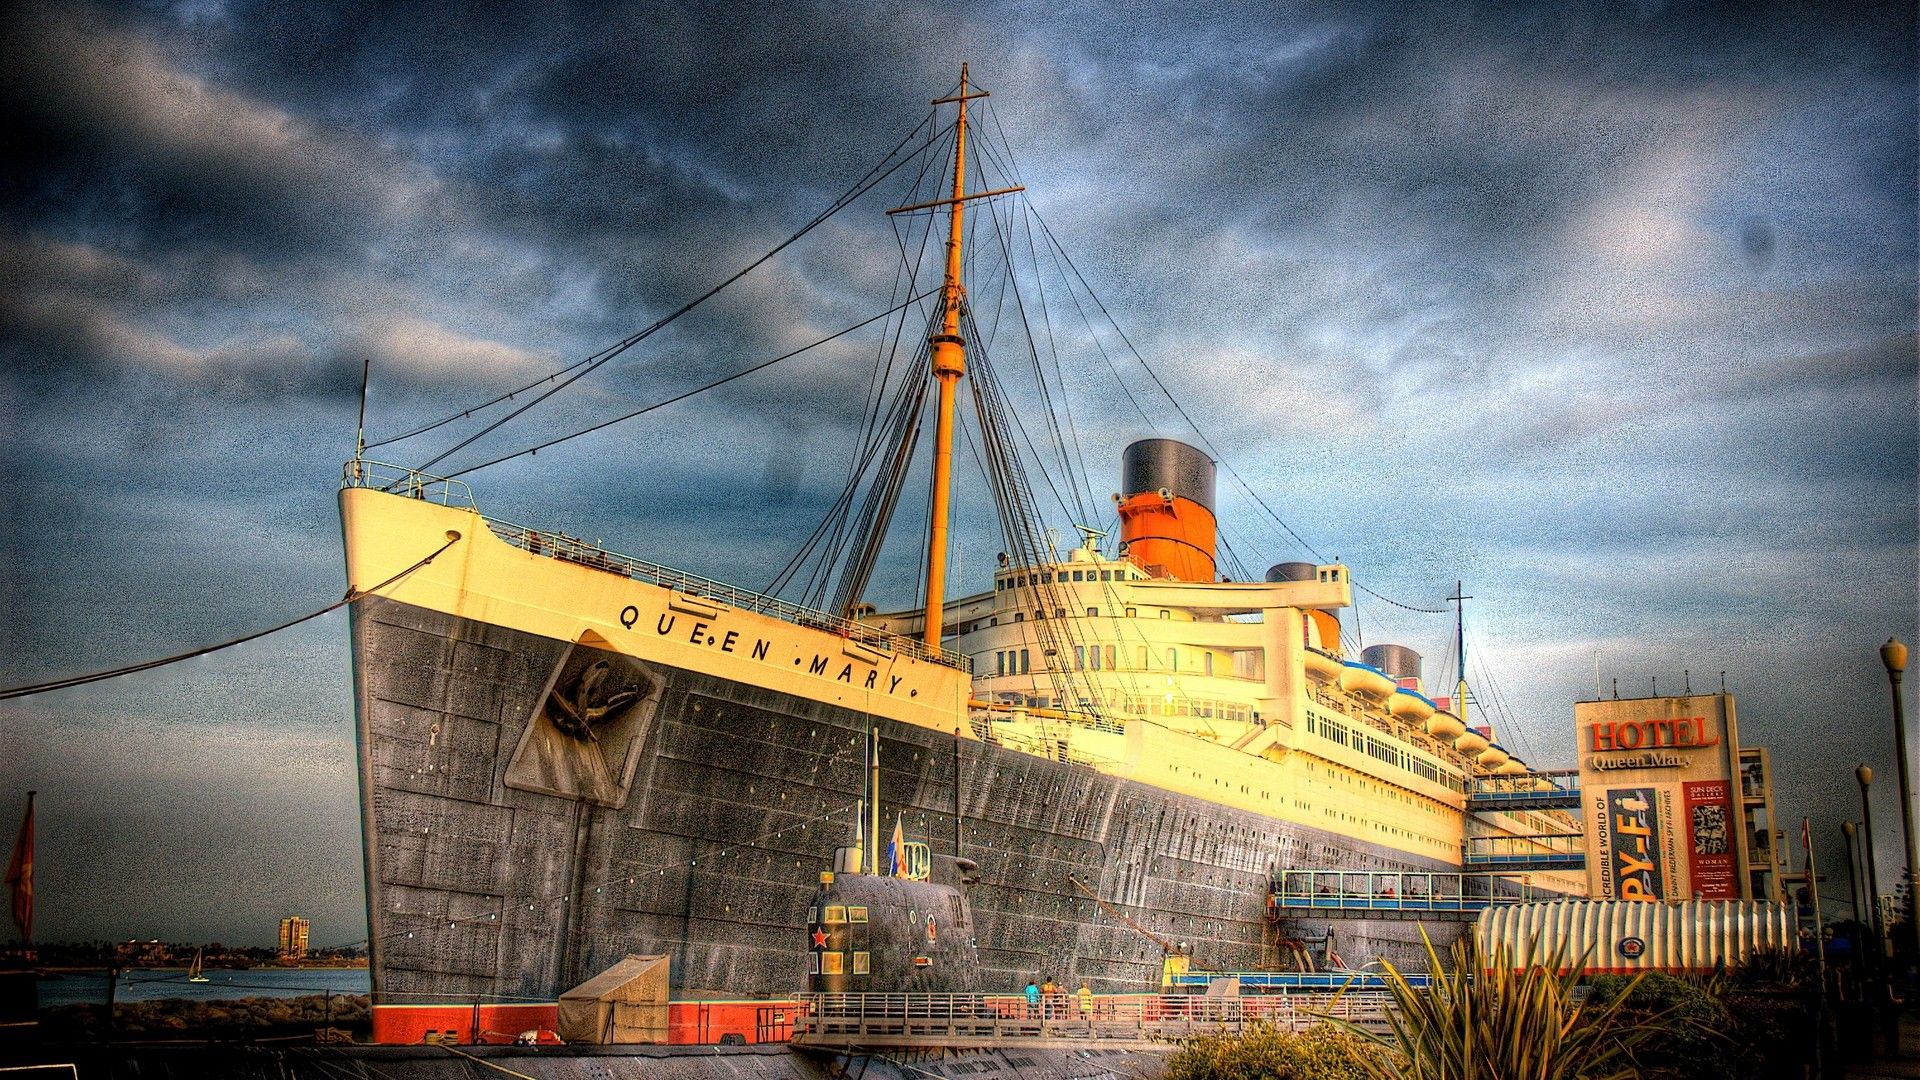 ships, Queen Mary wallpaper